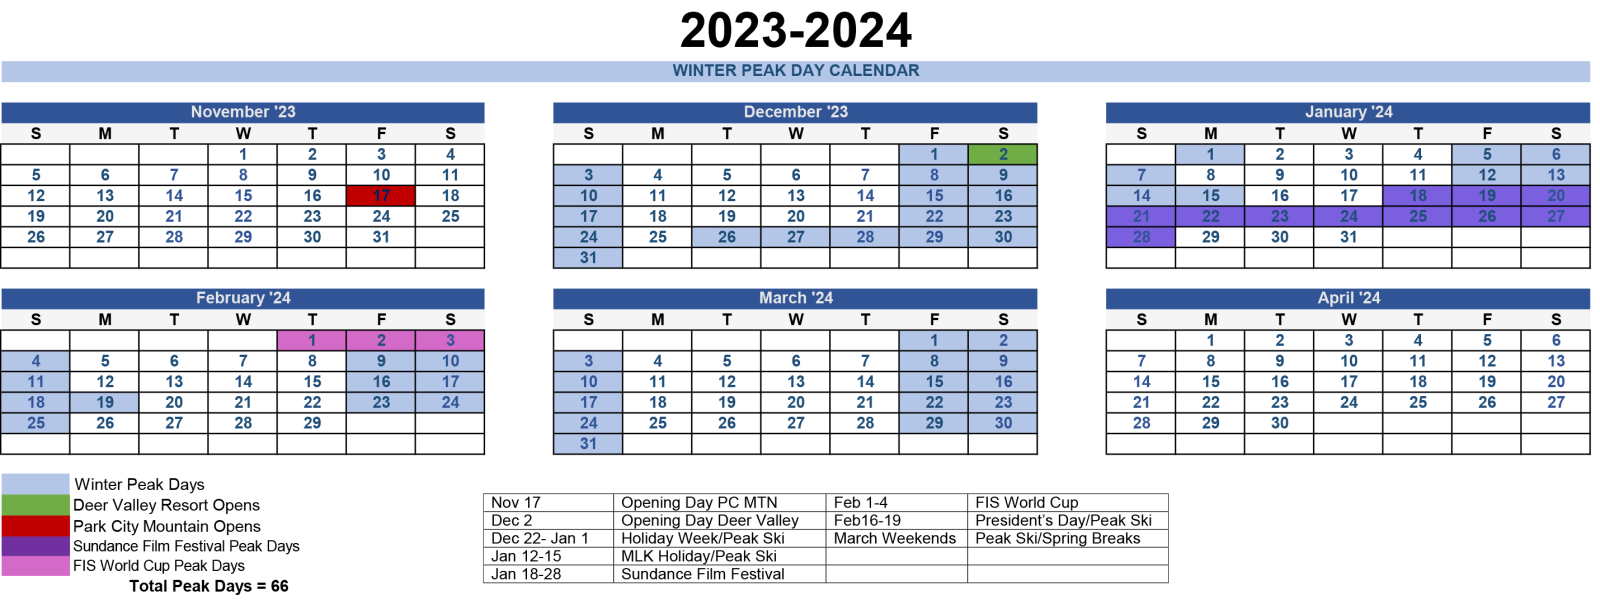 Winter Peak Day Calendar 2023.24 